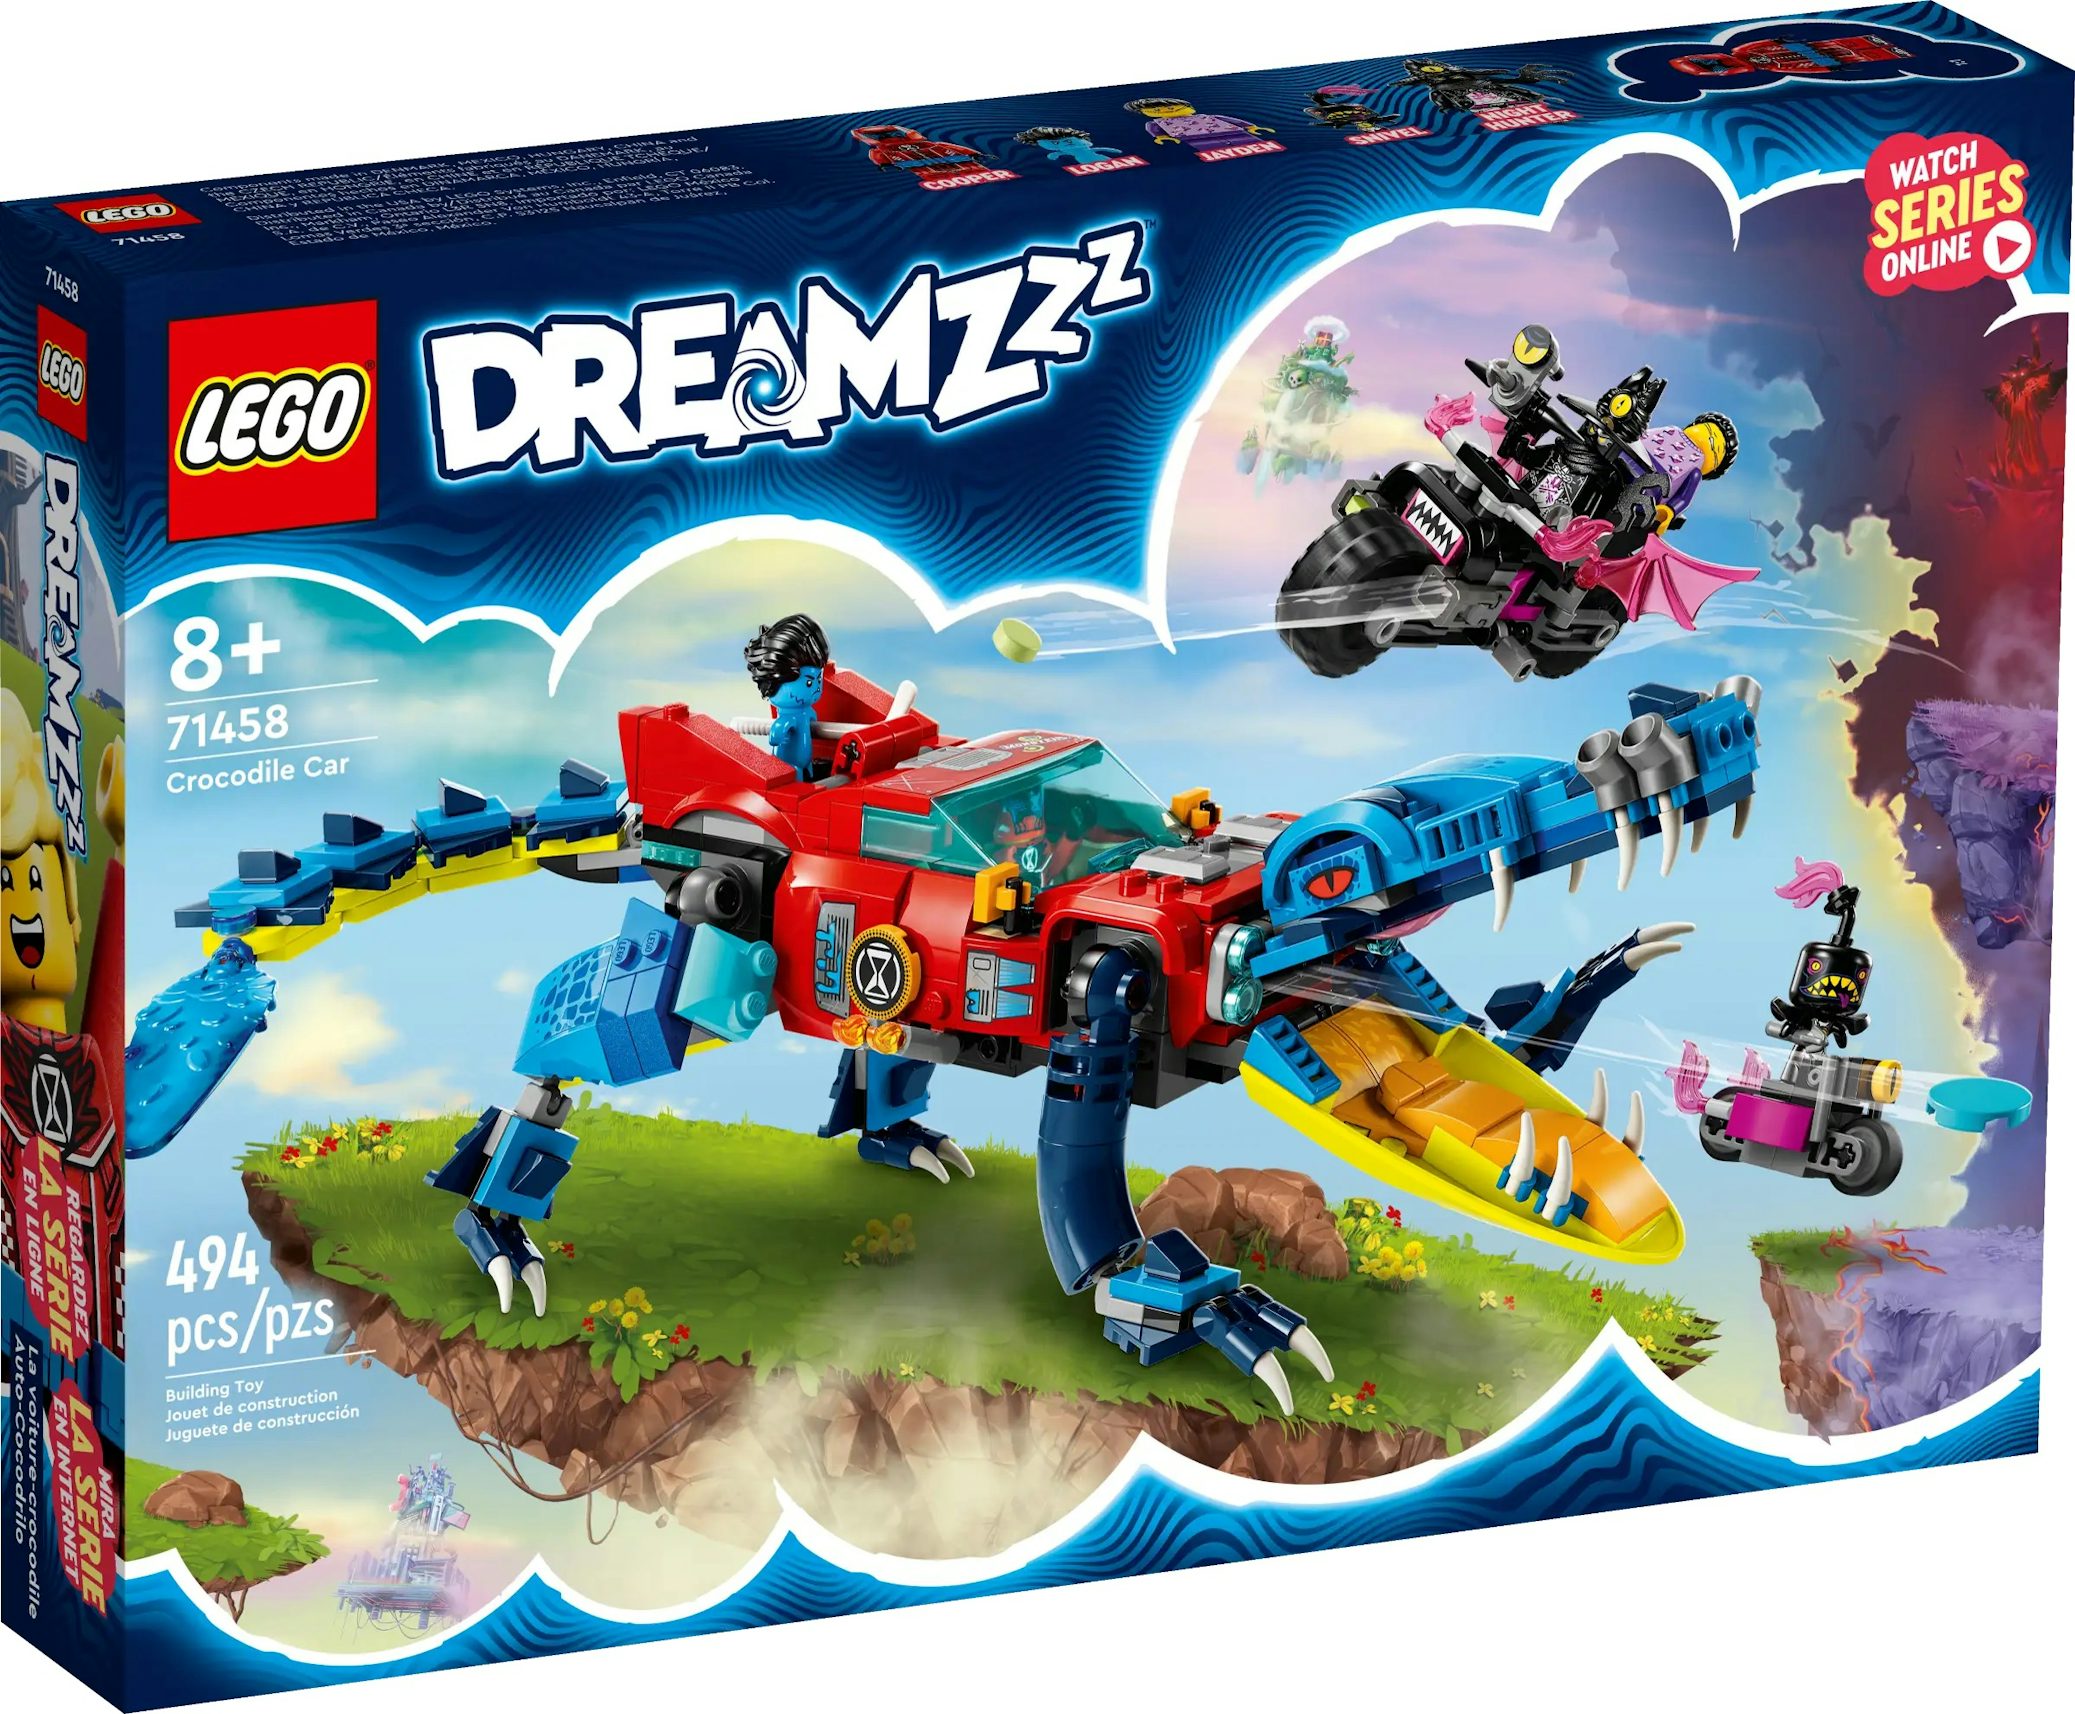 LEGO Dreamzzz Crocodile Car Set 71458 - CN